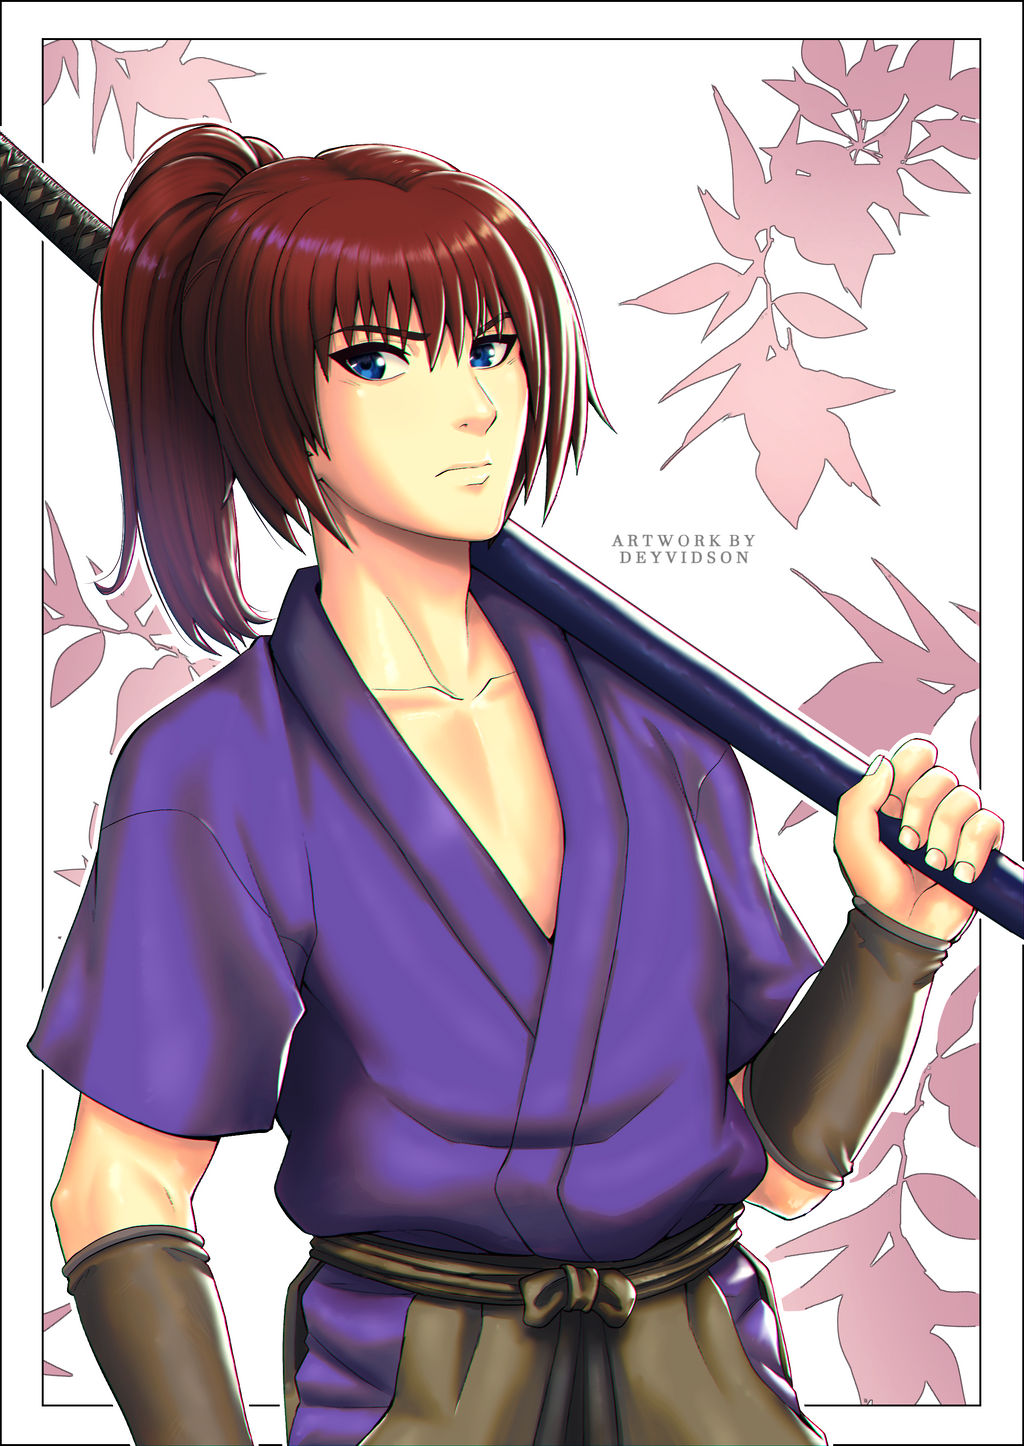 Himura Kenji, Rurouni Kenshin Wiki